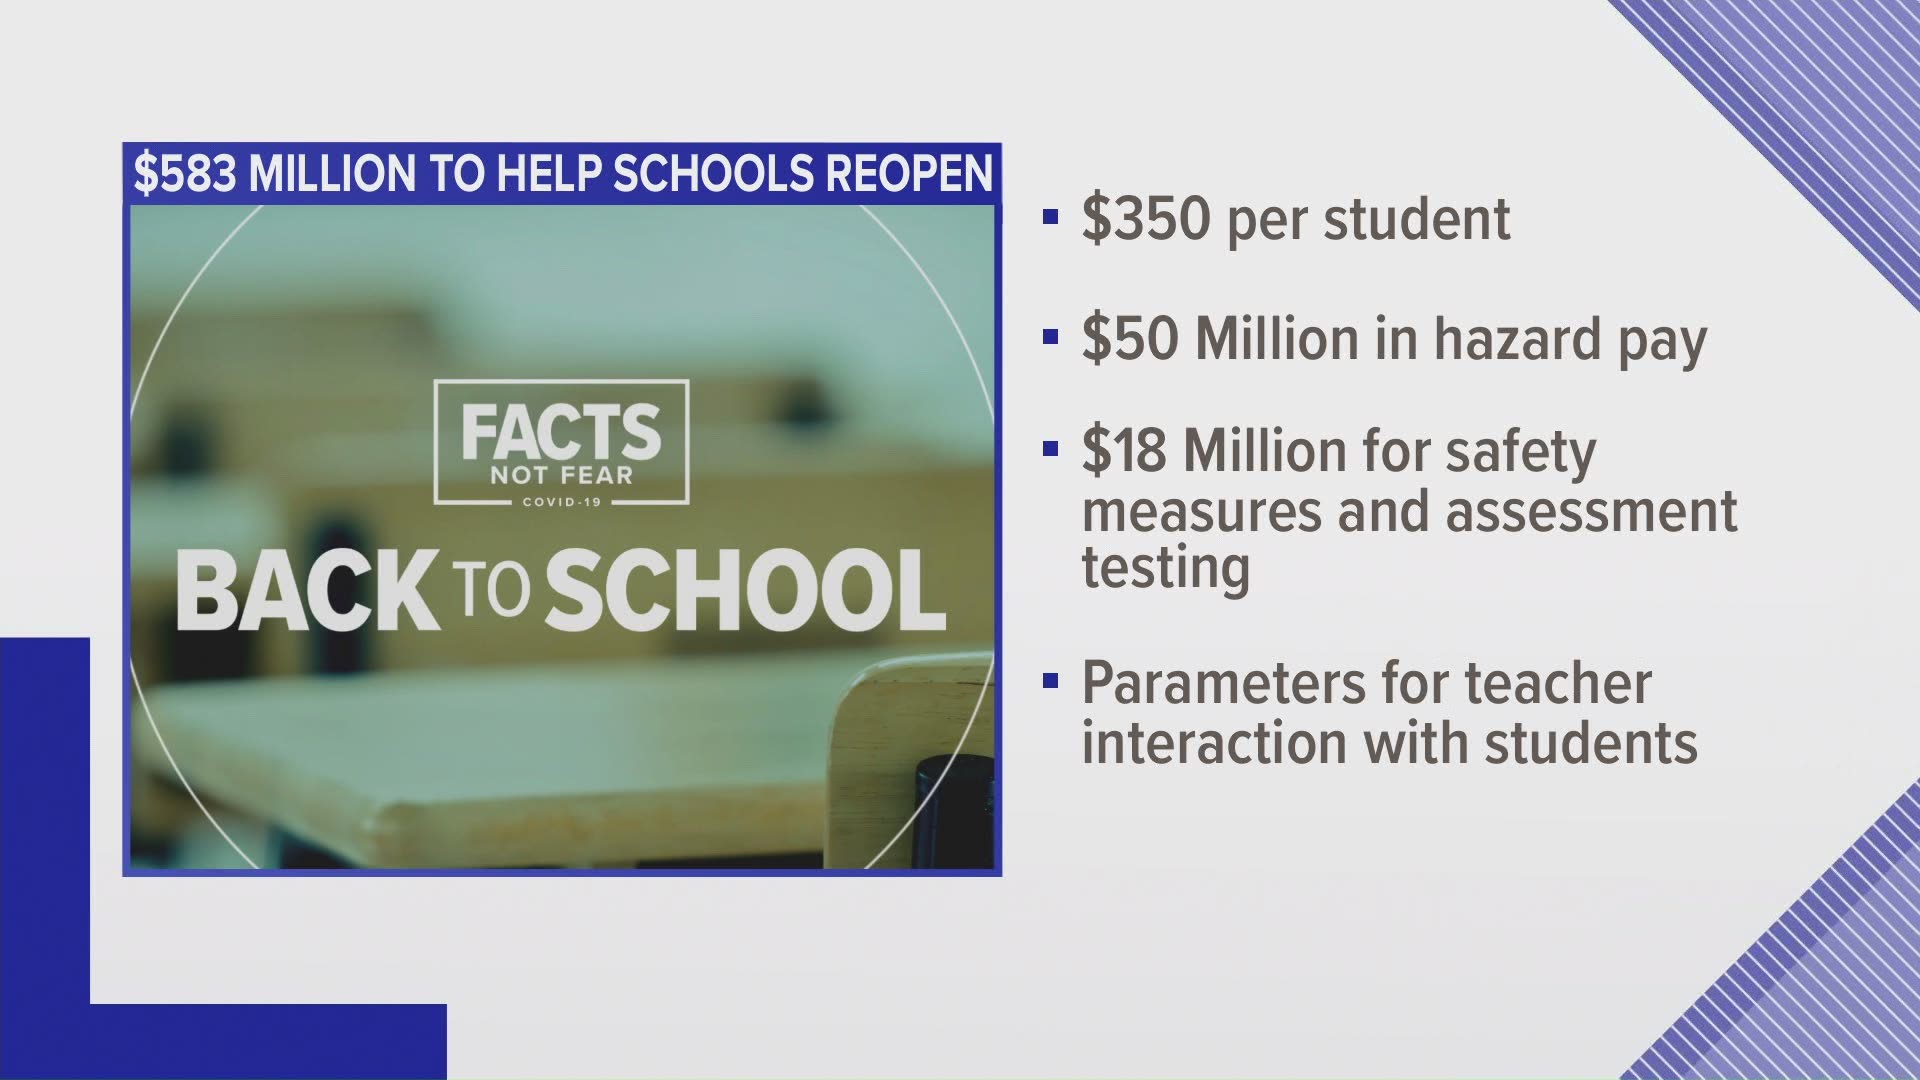 The $583 million plan includes $50 million for teacher hazard pay.